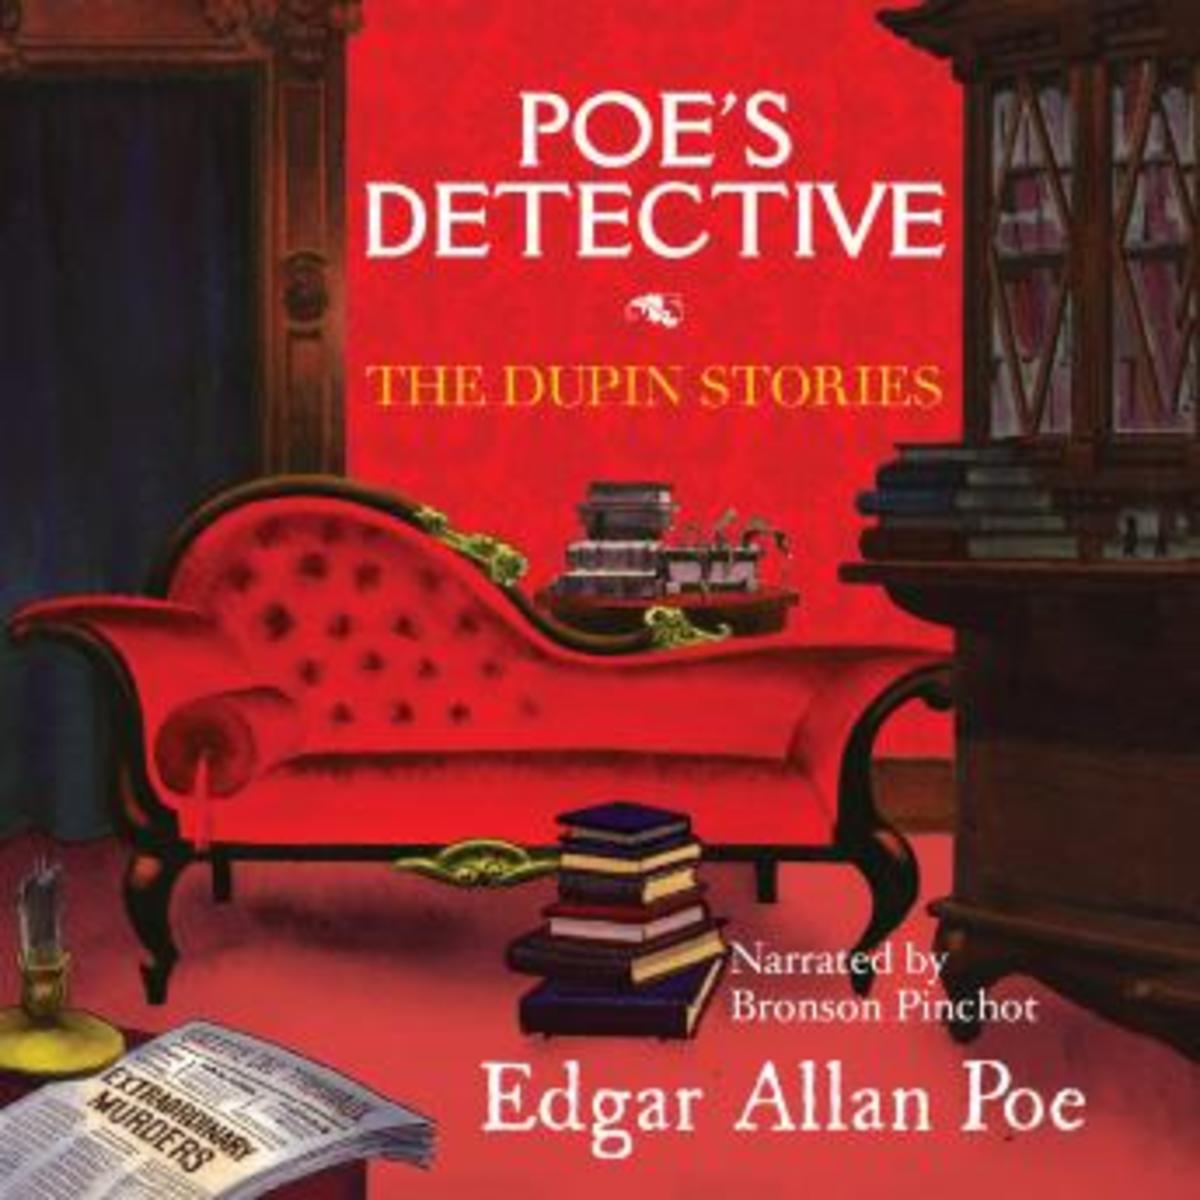 How Edgar Allan Poe Invented the Detective Genre